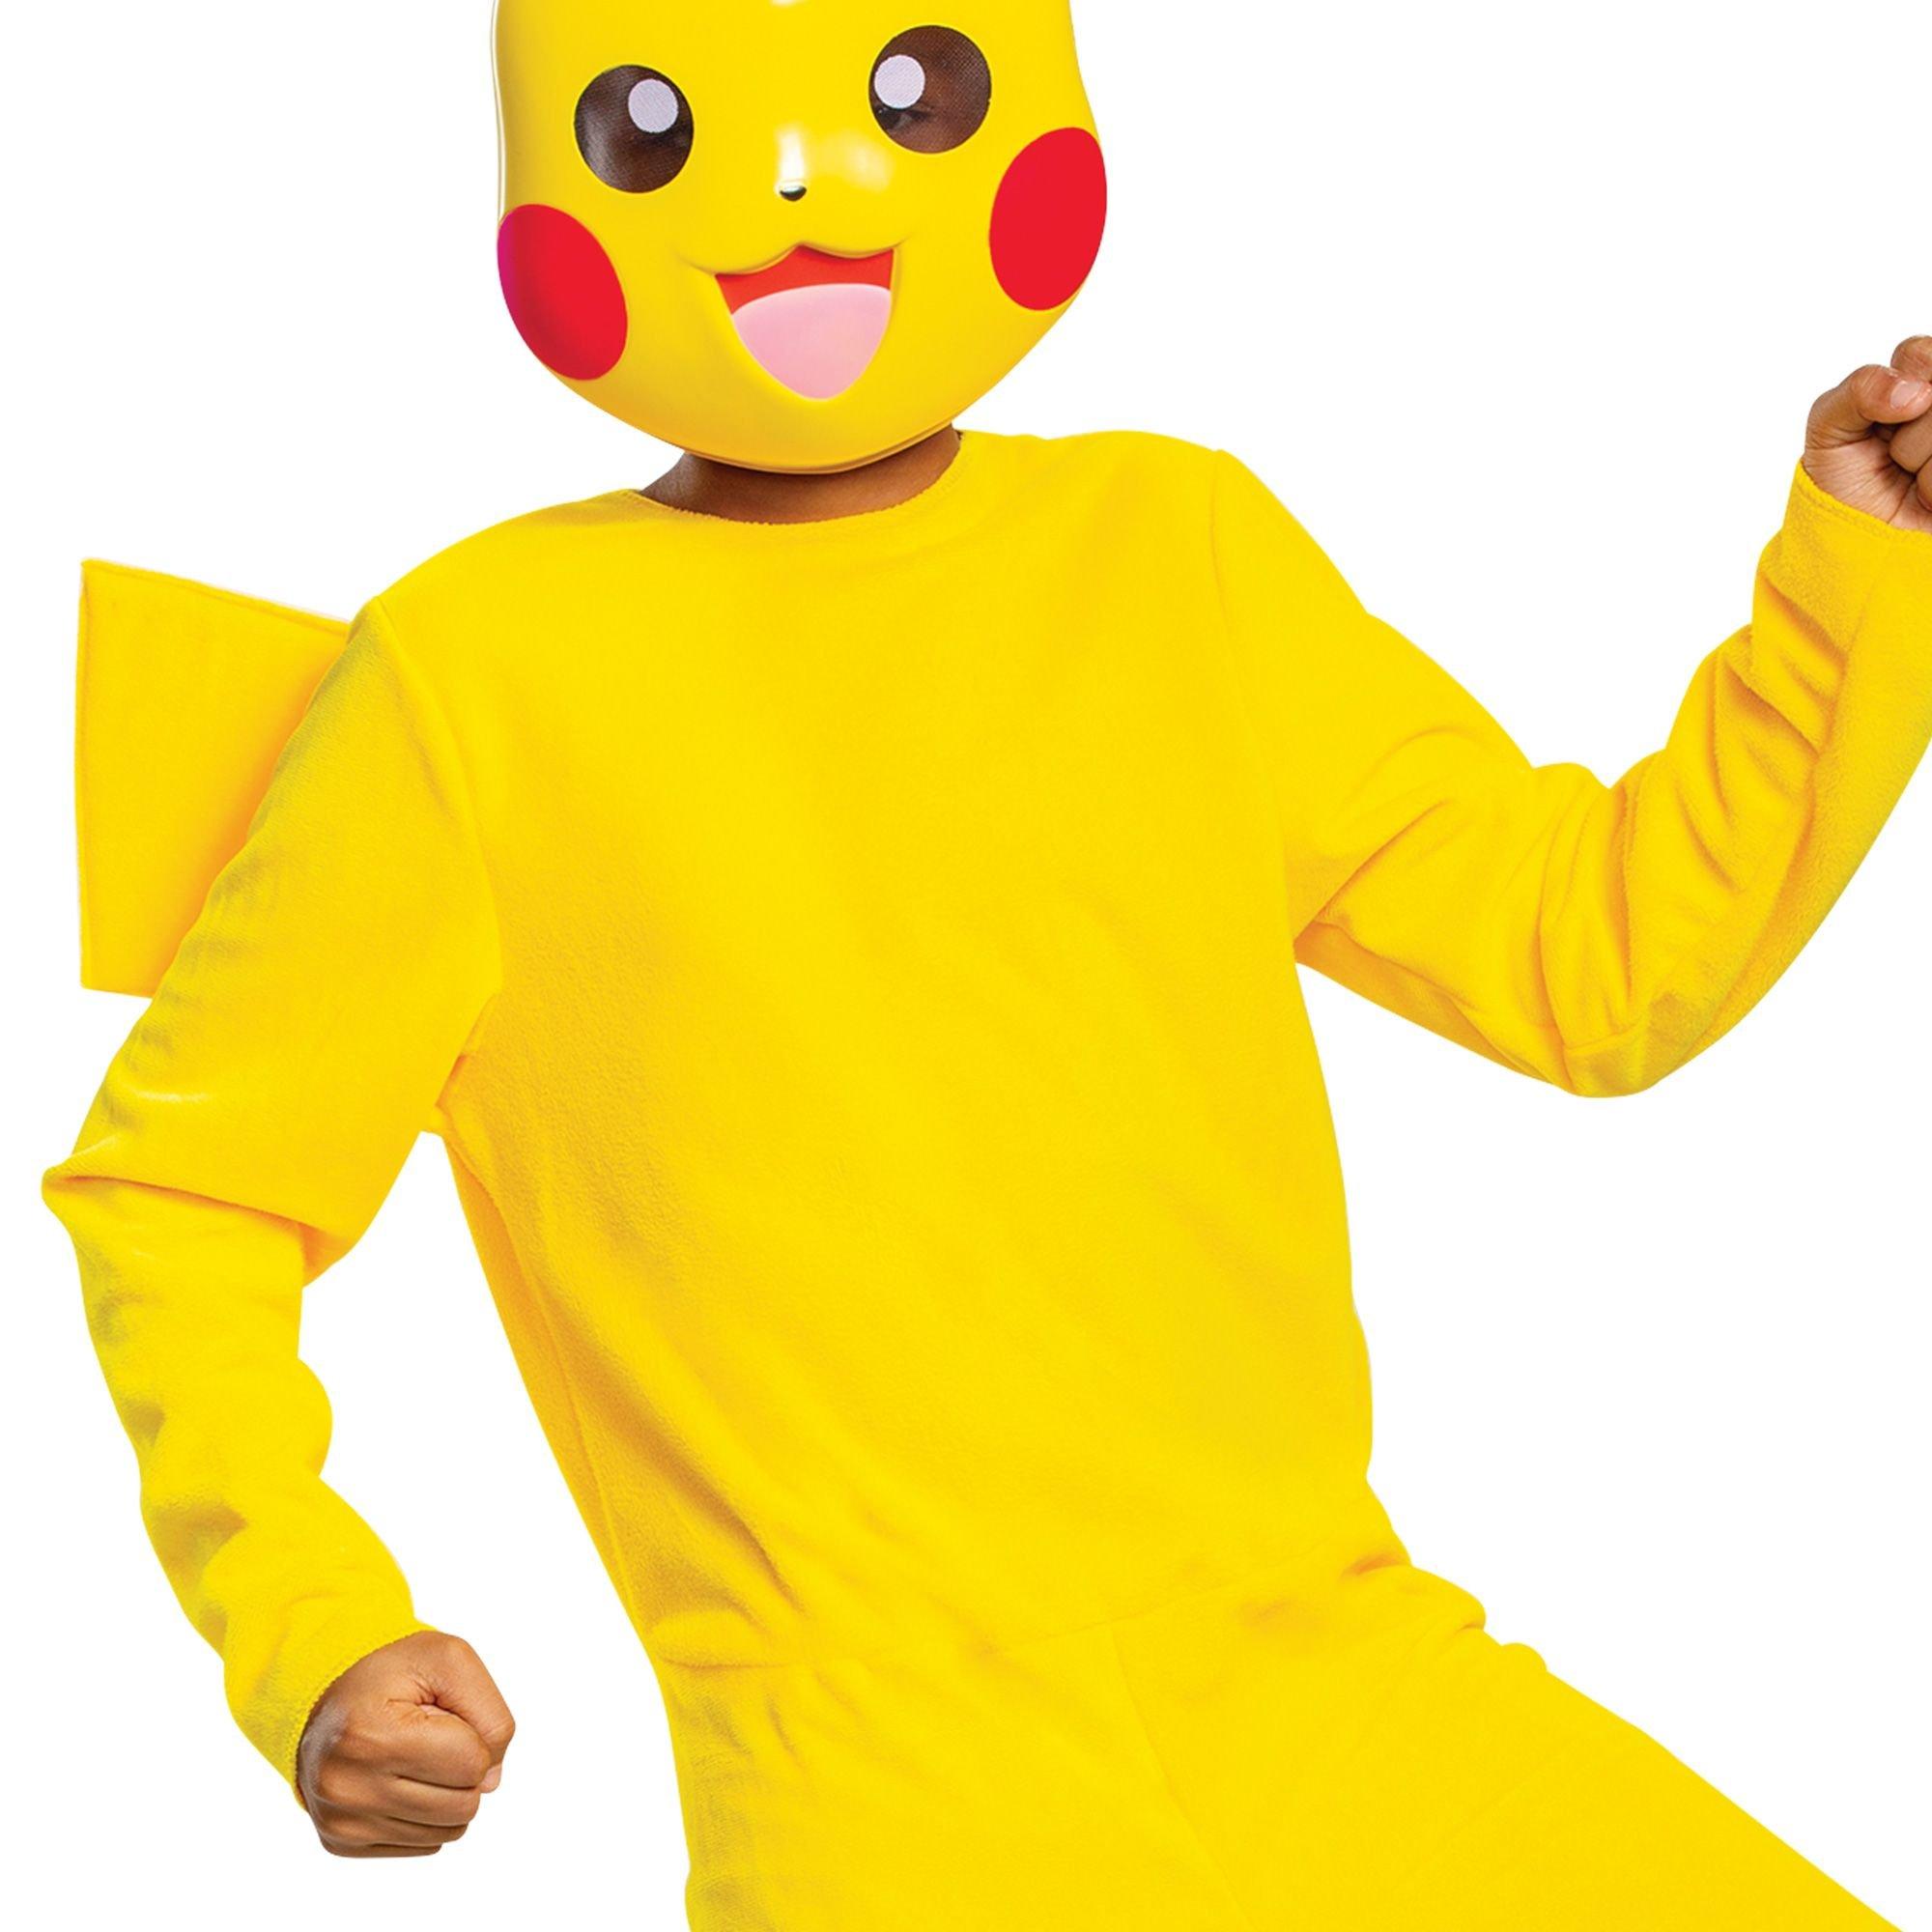 Kids' Classic Pikachu Costume - Pokémon